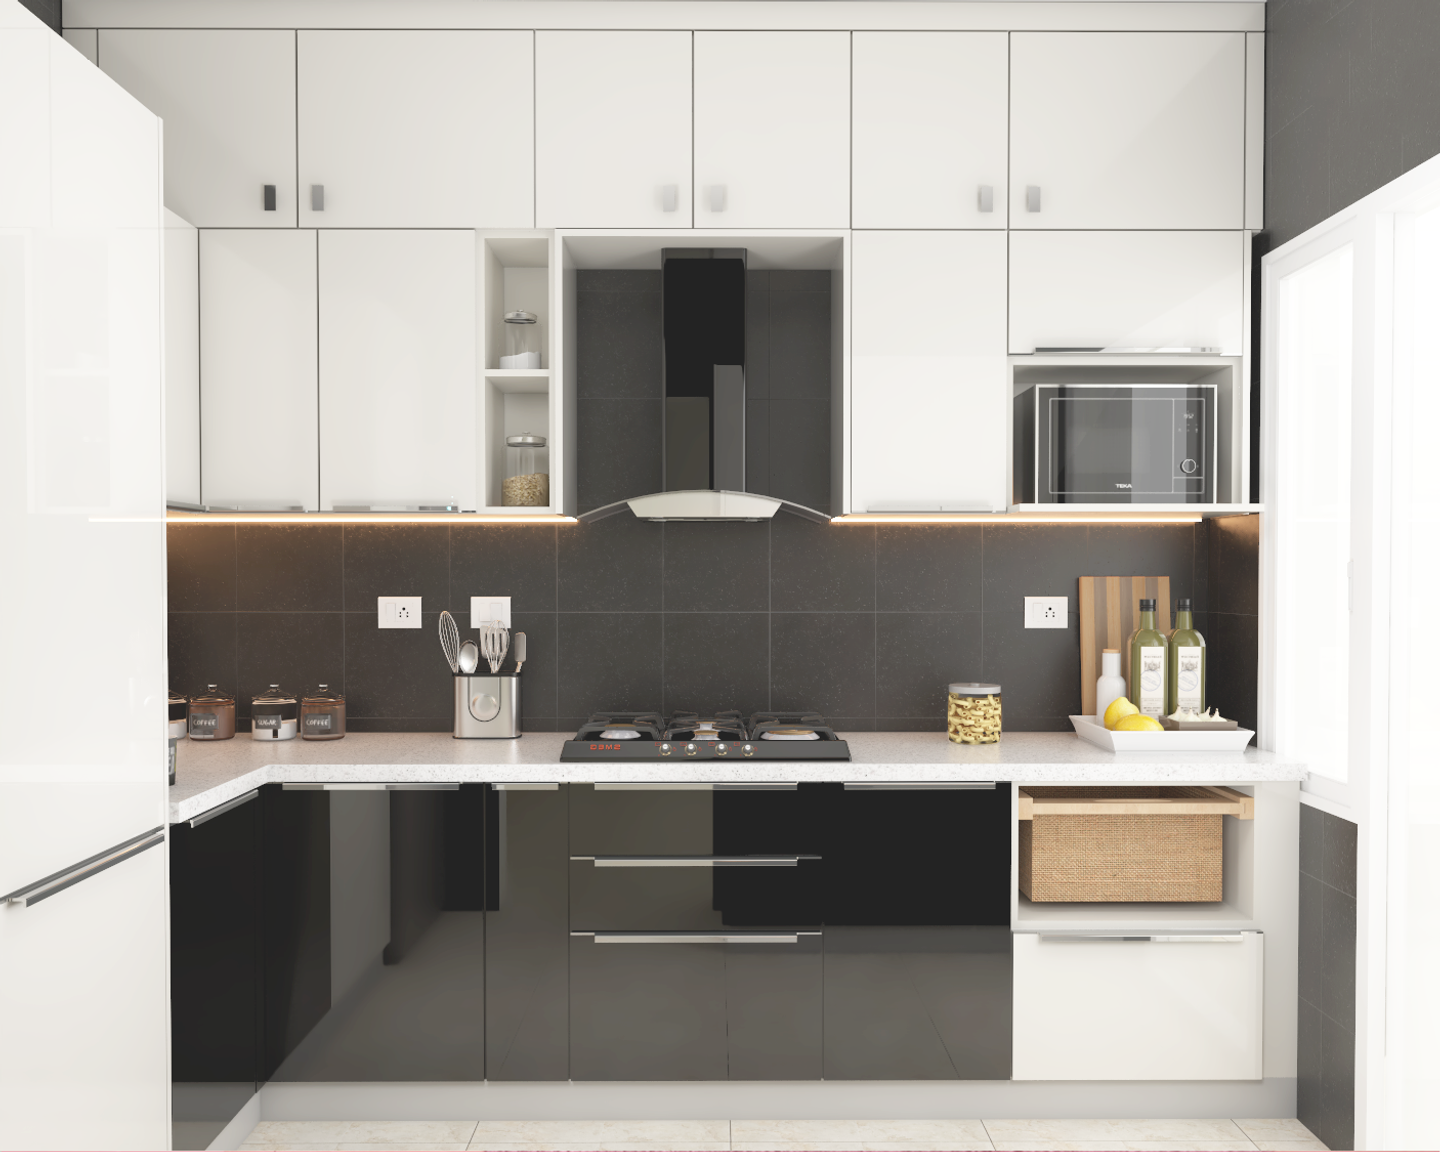 Premium Two-Toned Kitchen Design - Livspace